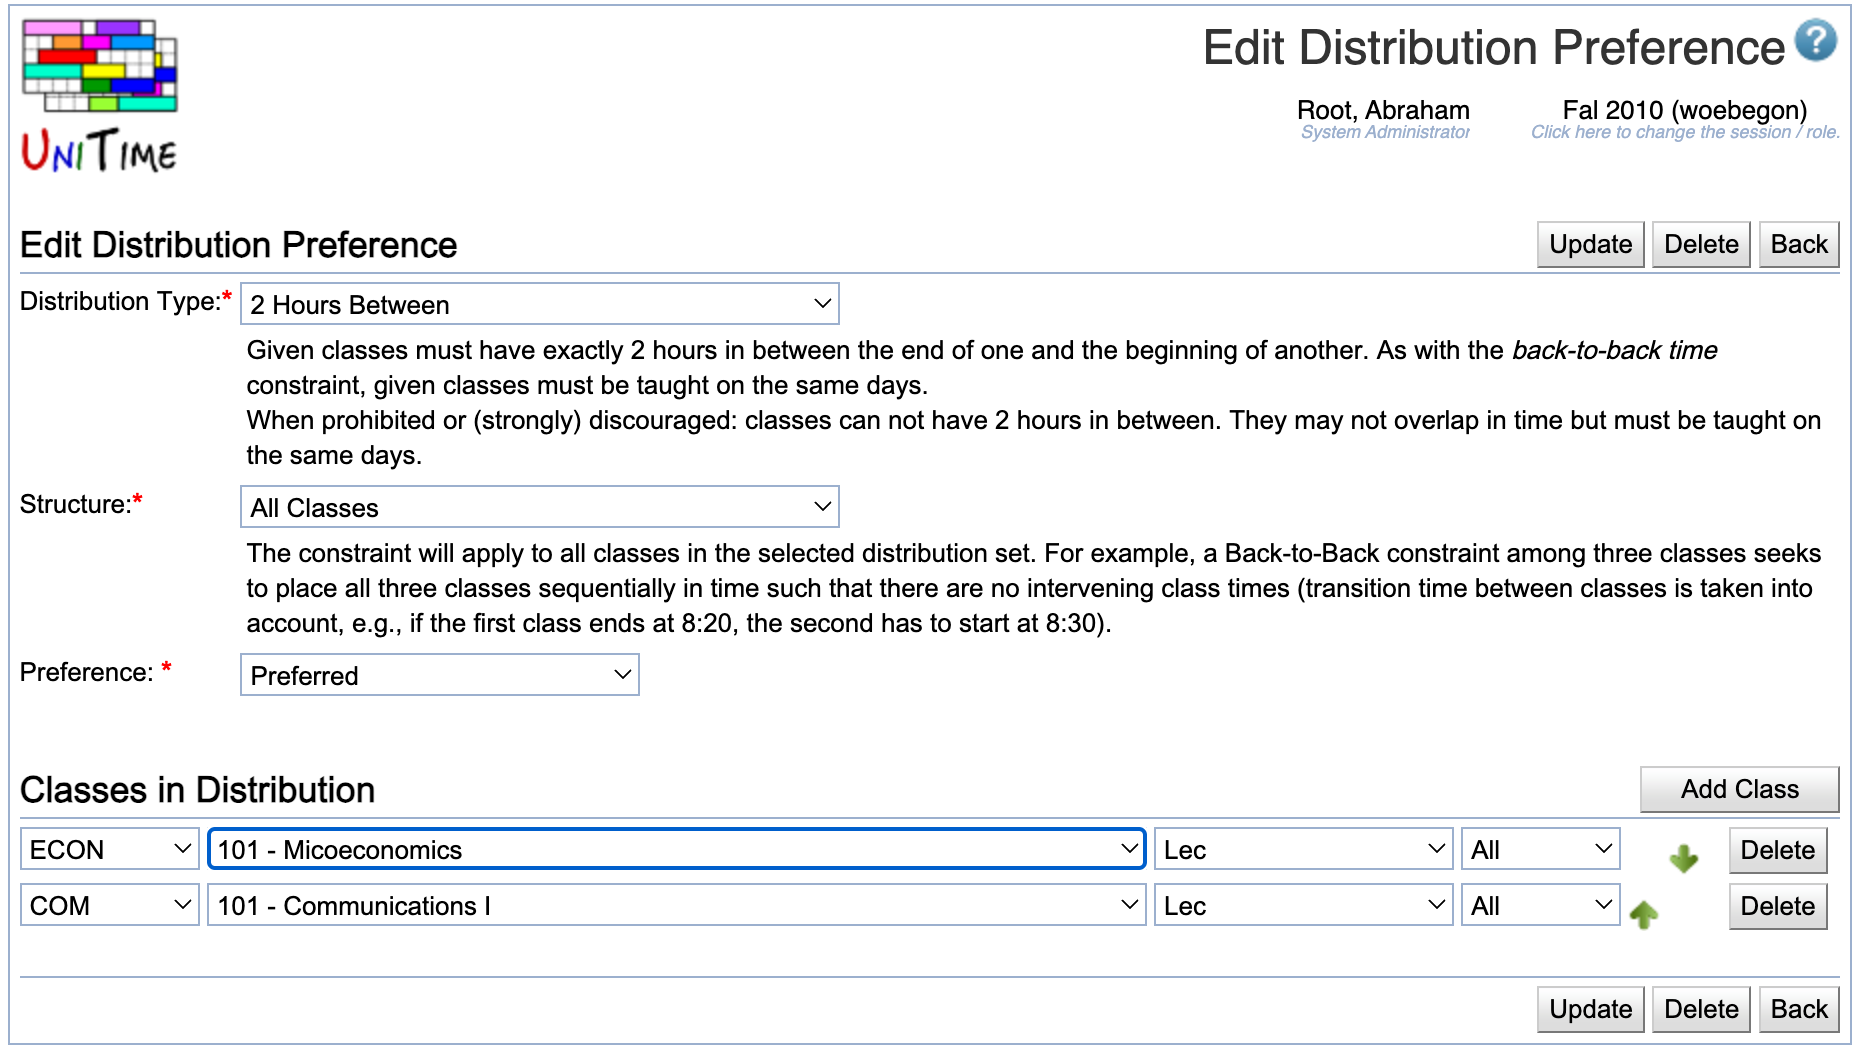 Edit Distribution Preference